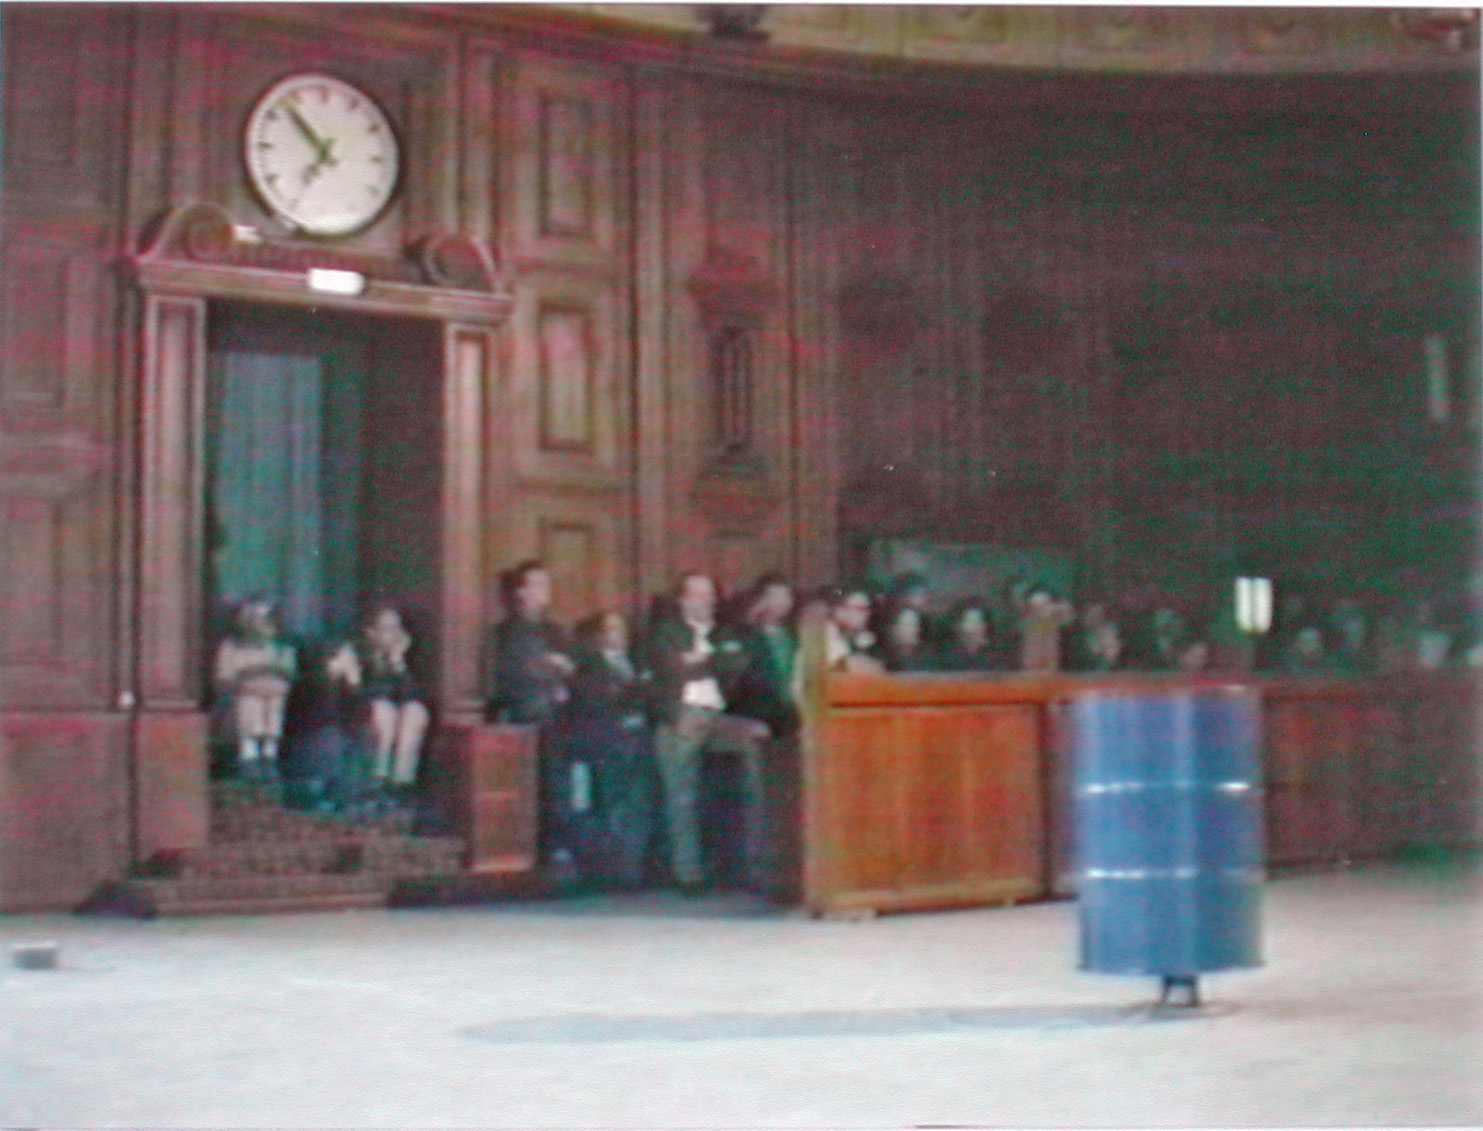 Roman Signer, Performance, Kunst-Buffet Badischer Bahnhof Basel, 1989
6 Video-Outprints
Edition of 30